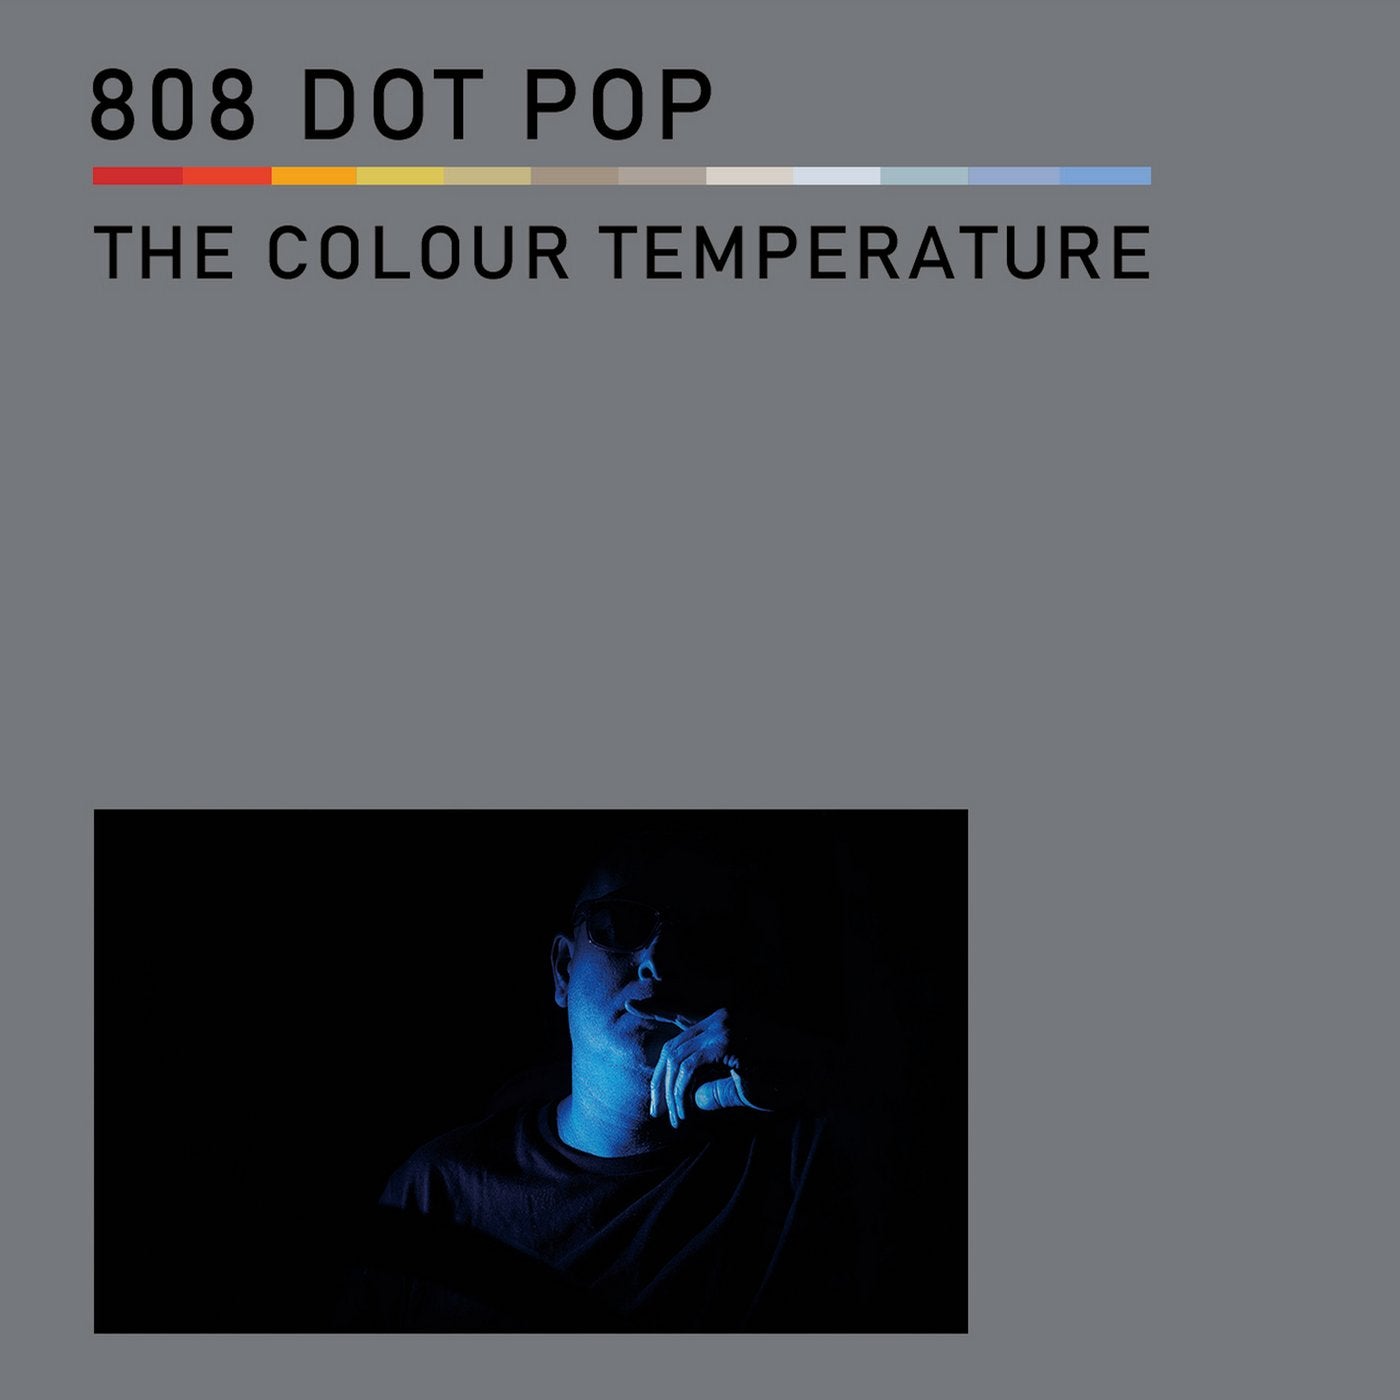 The Colour Temperature